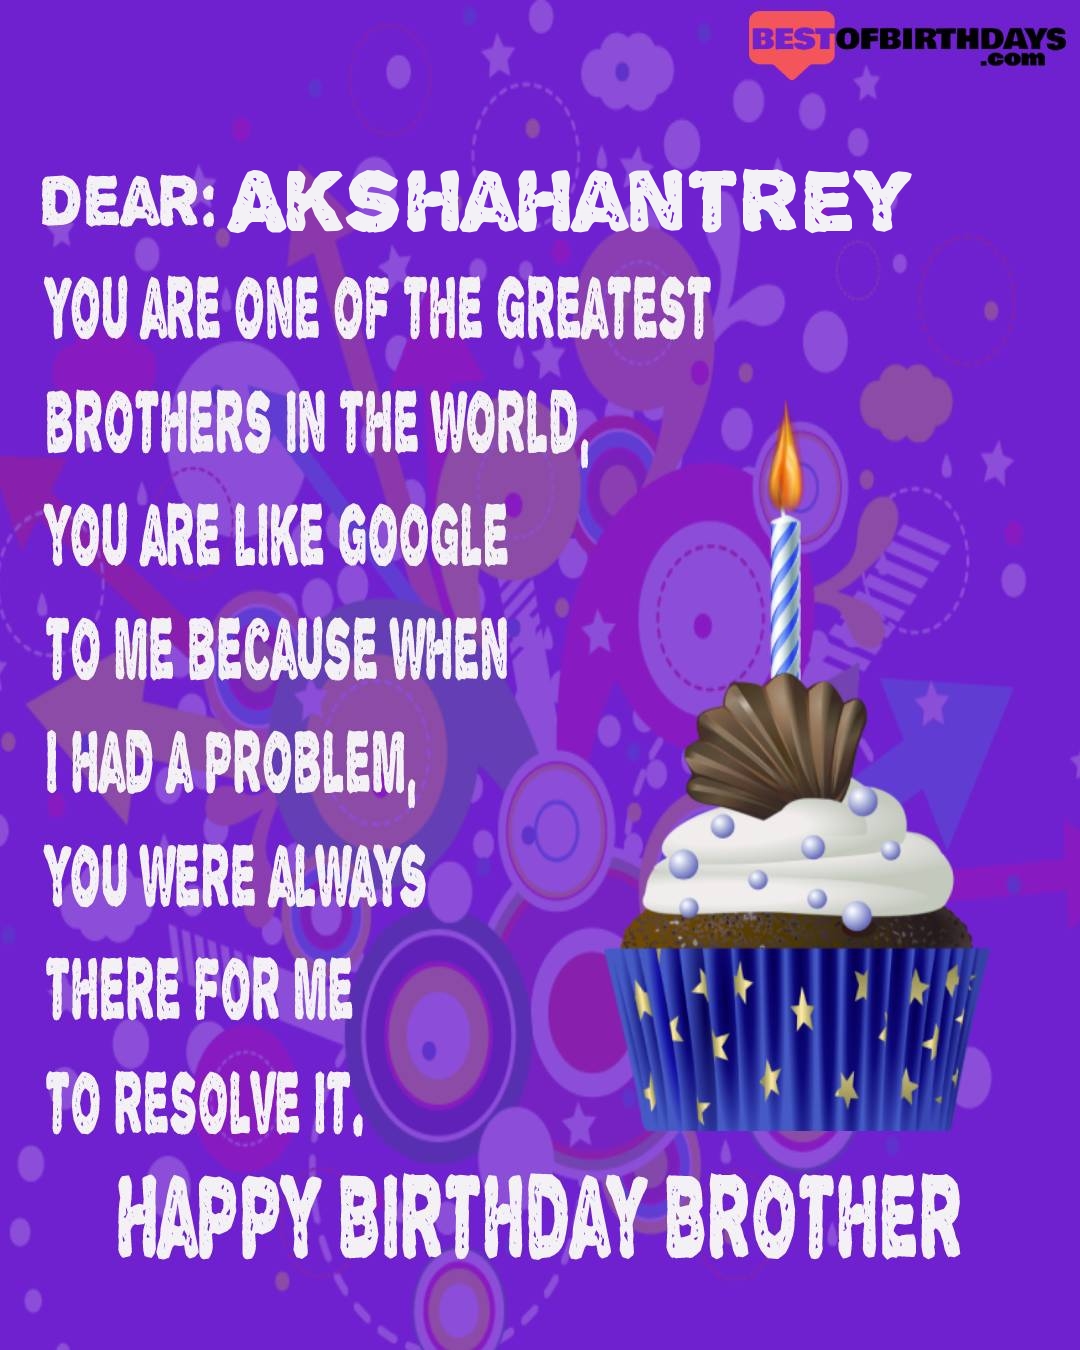 Happy birthday akshahantrey bhai brother bro